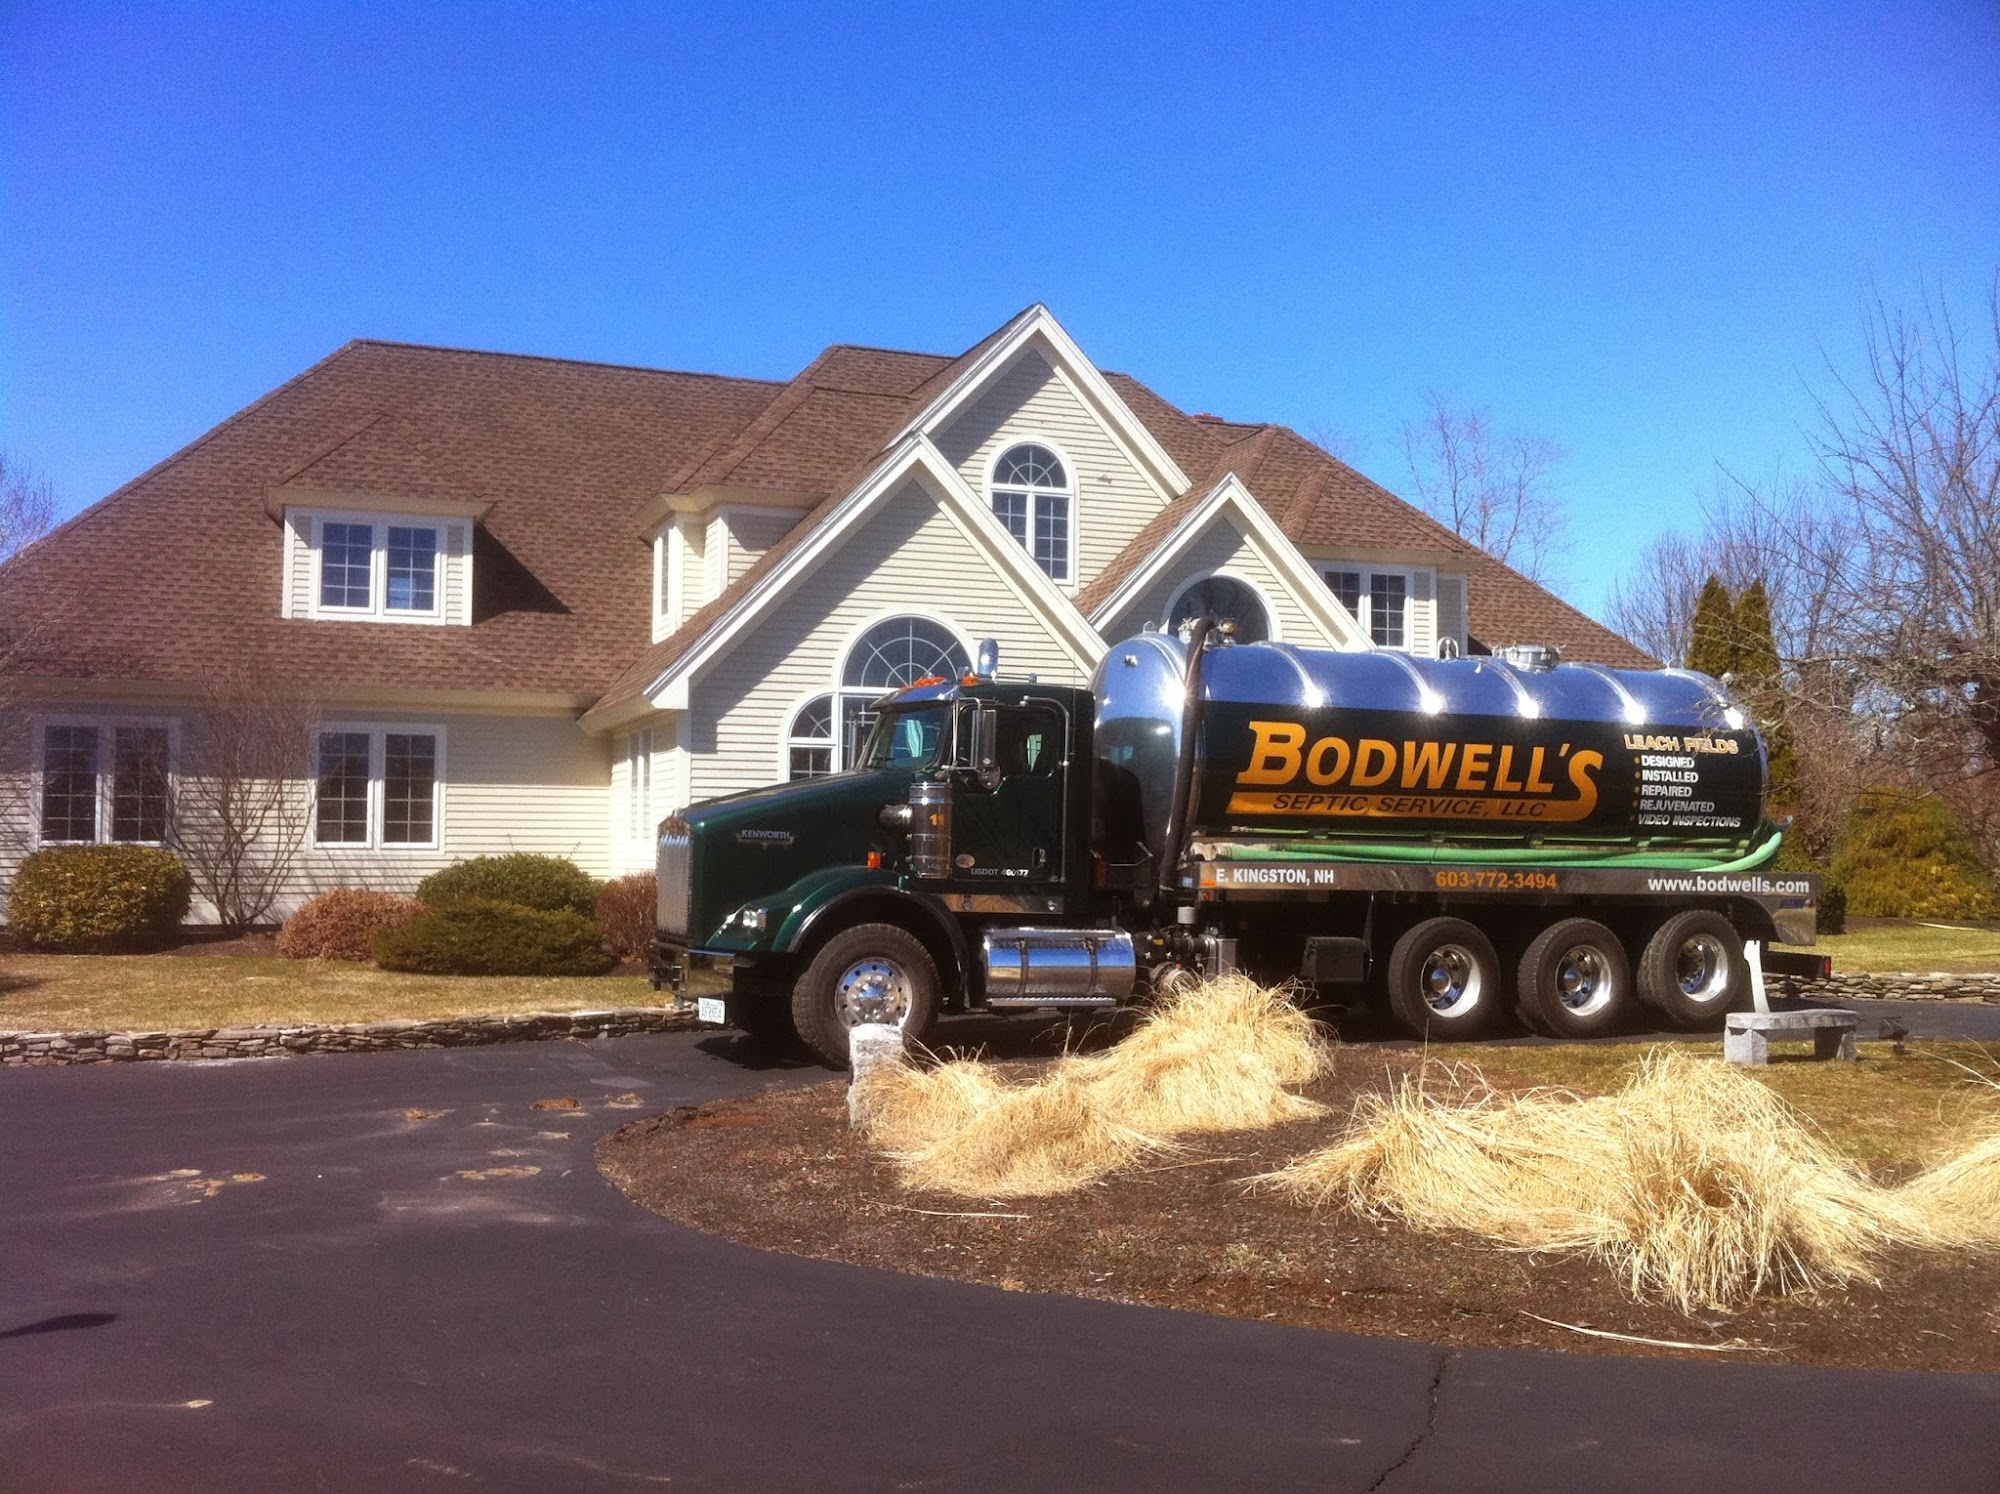 BODWELL'S SEPTIC SERVICE, LLC N Rd, East Kingston New Hampshire 03827